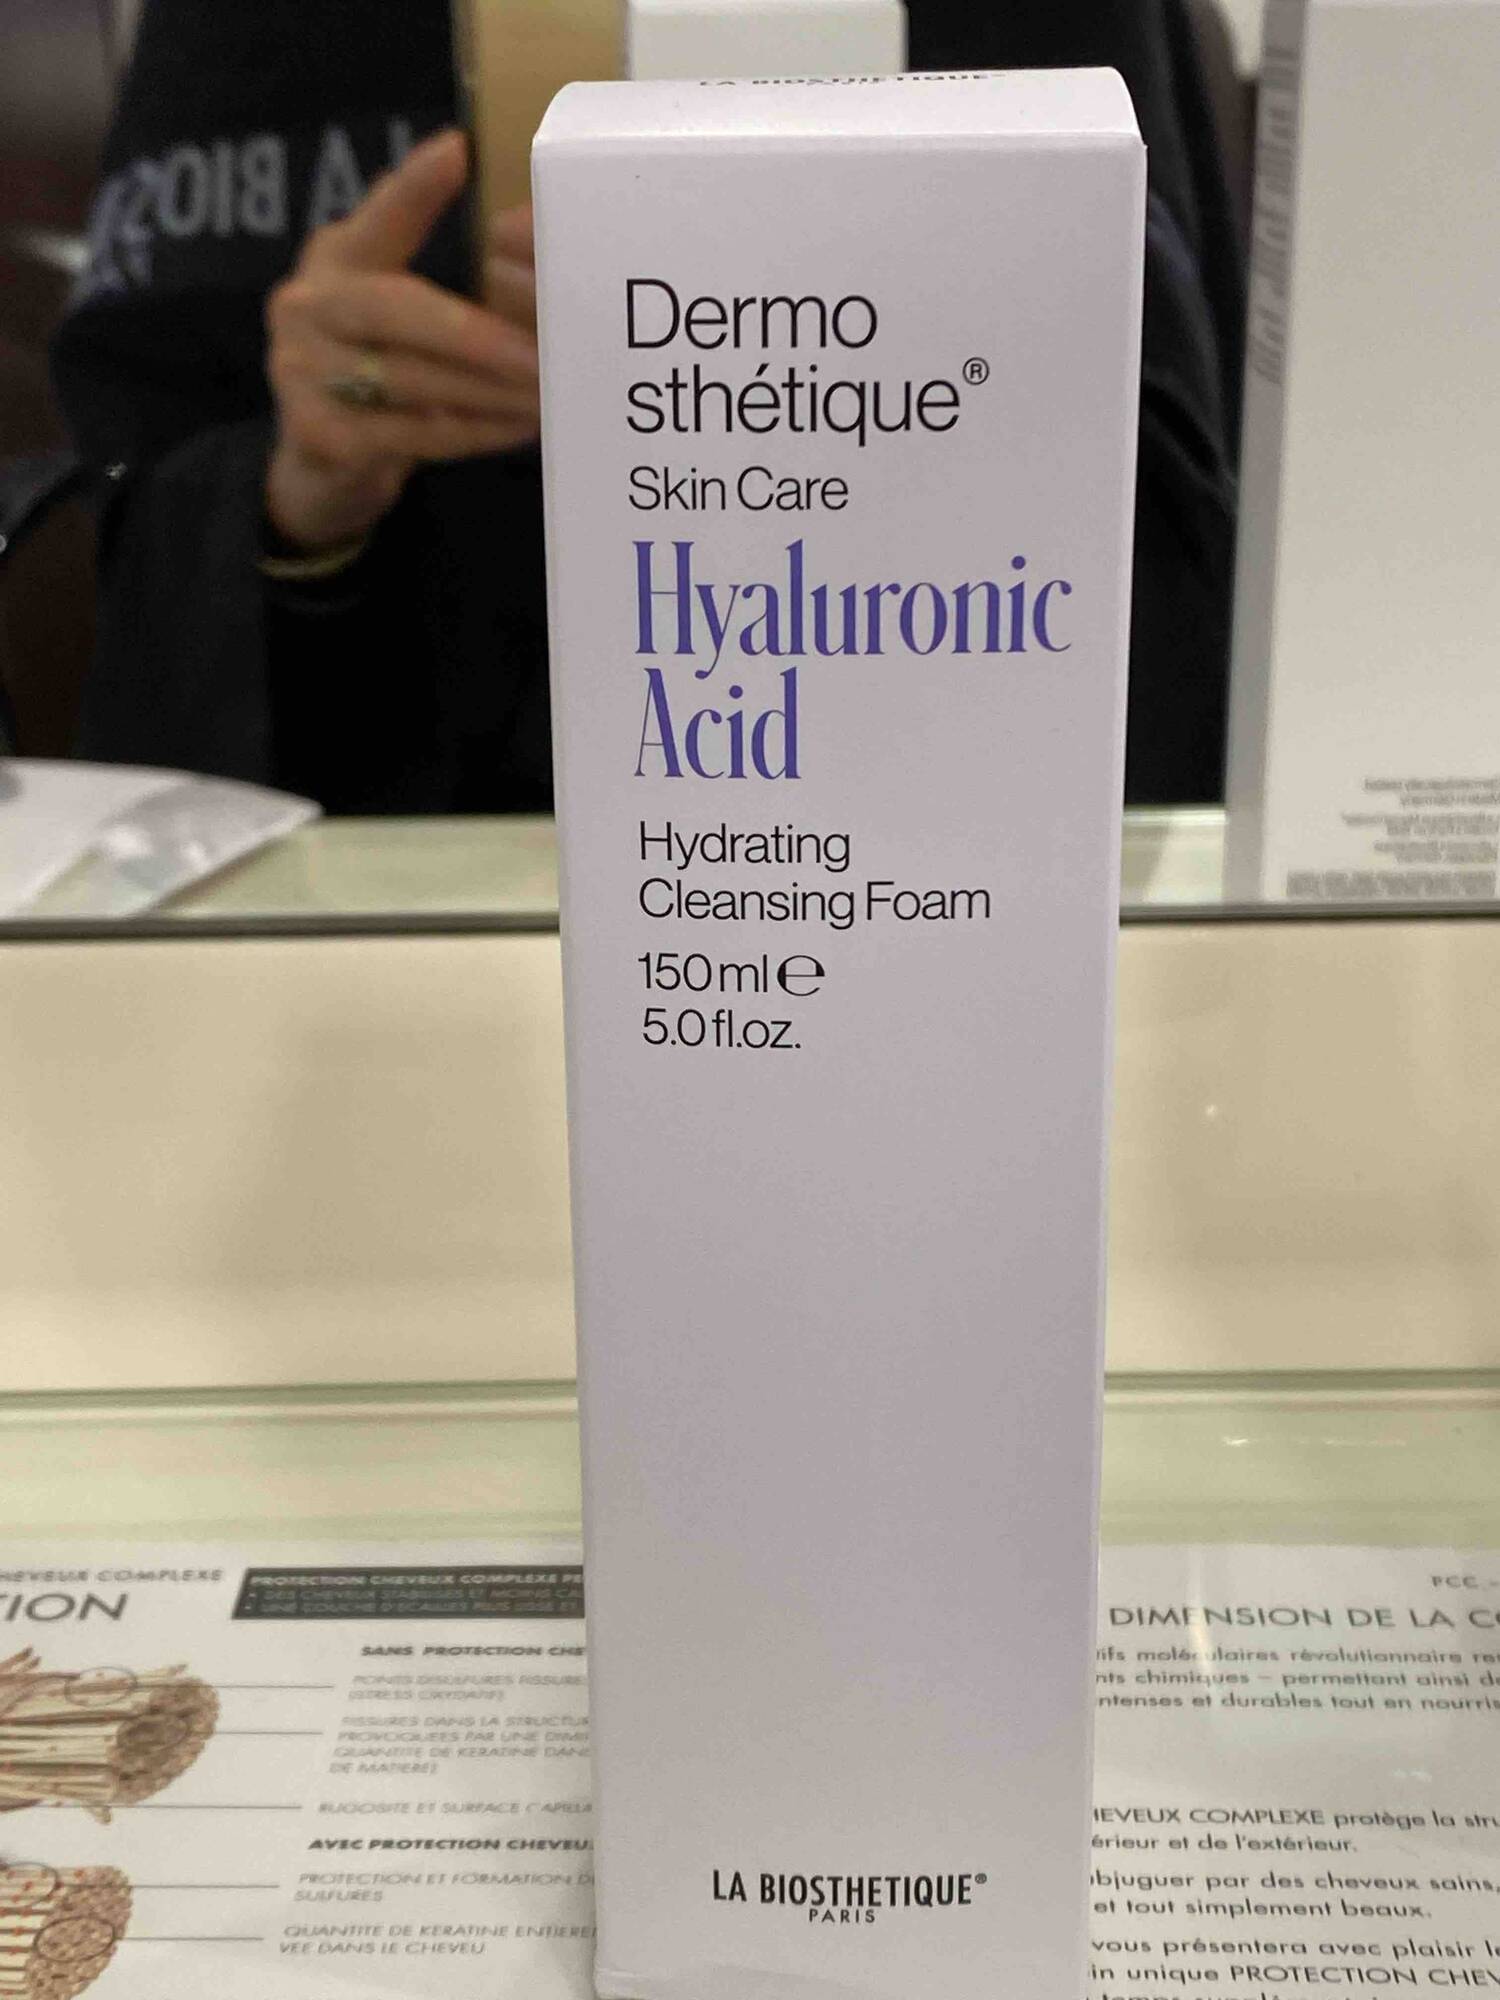 LA BIOSTHETIQUE - Dermosthétique Hyaluronic acid - Hydrating cleansing foam